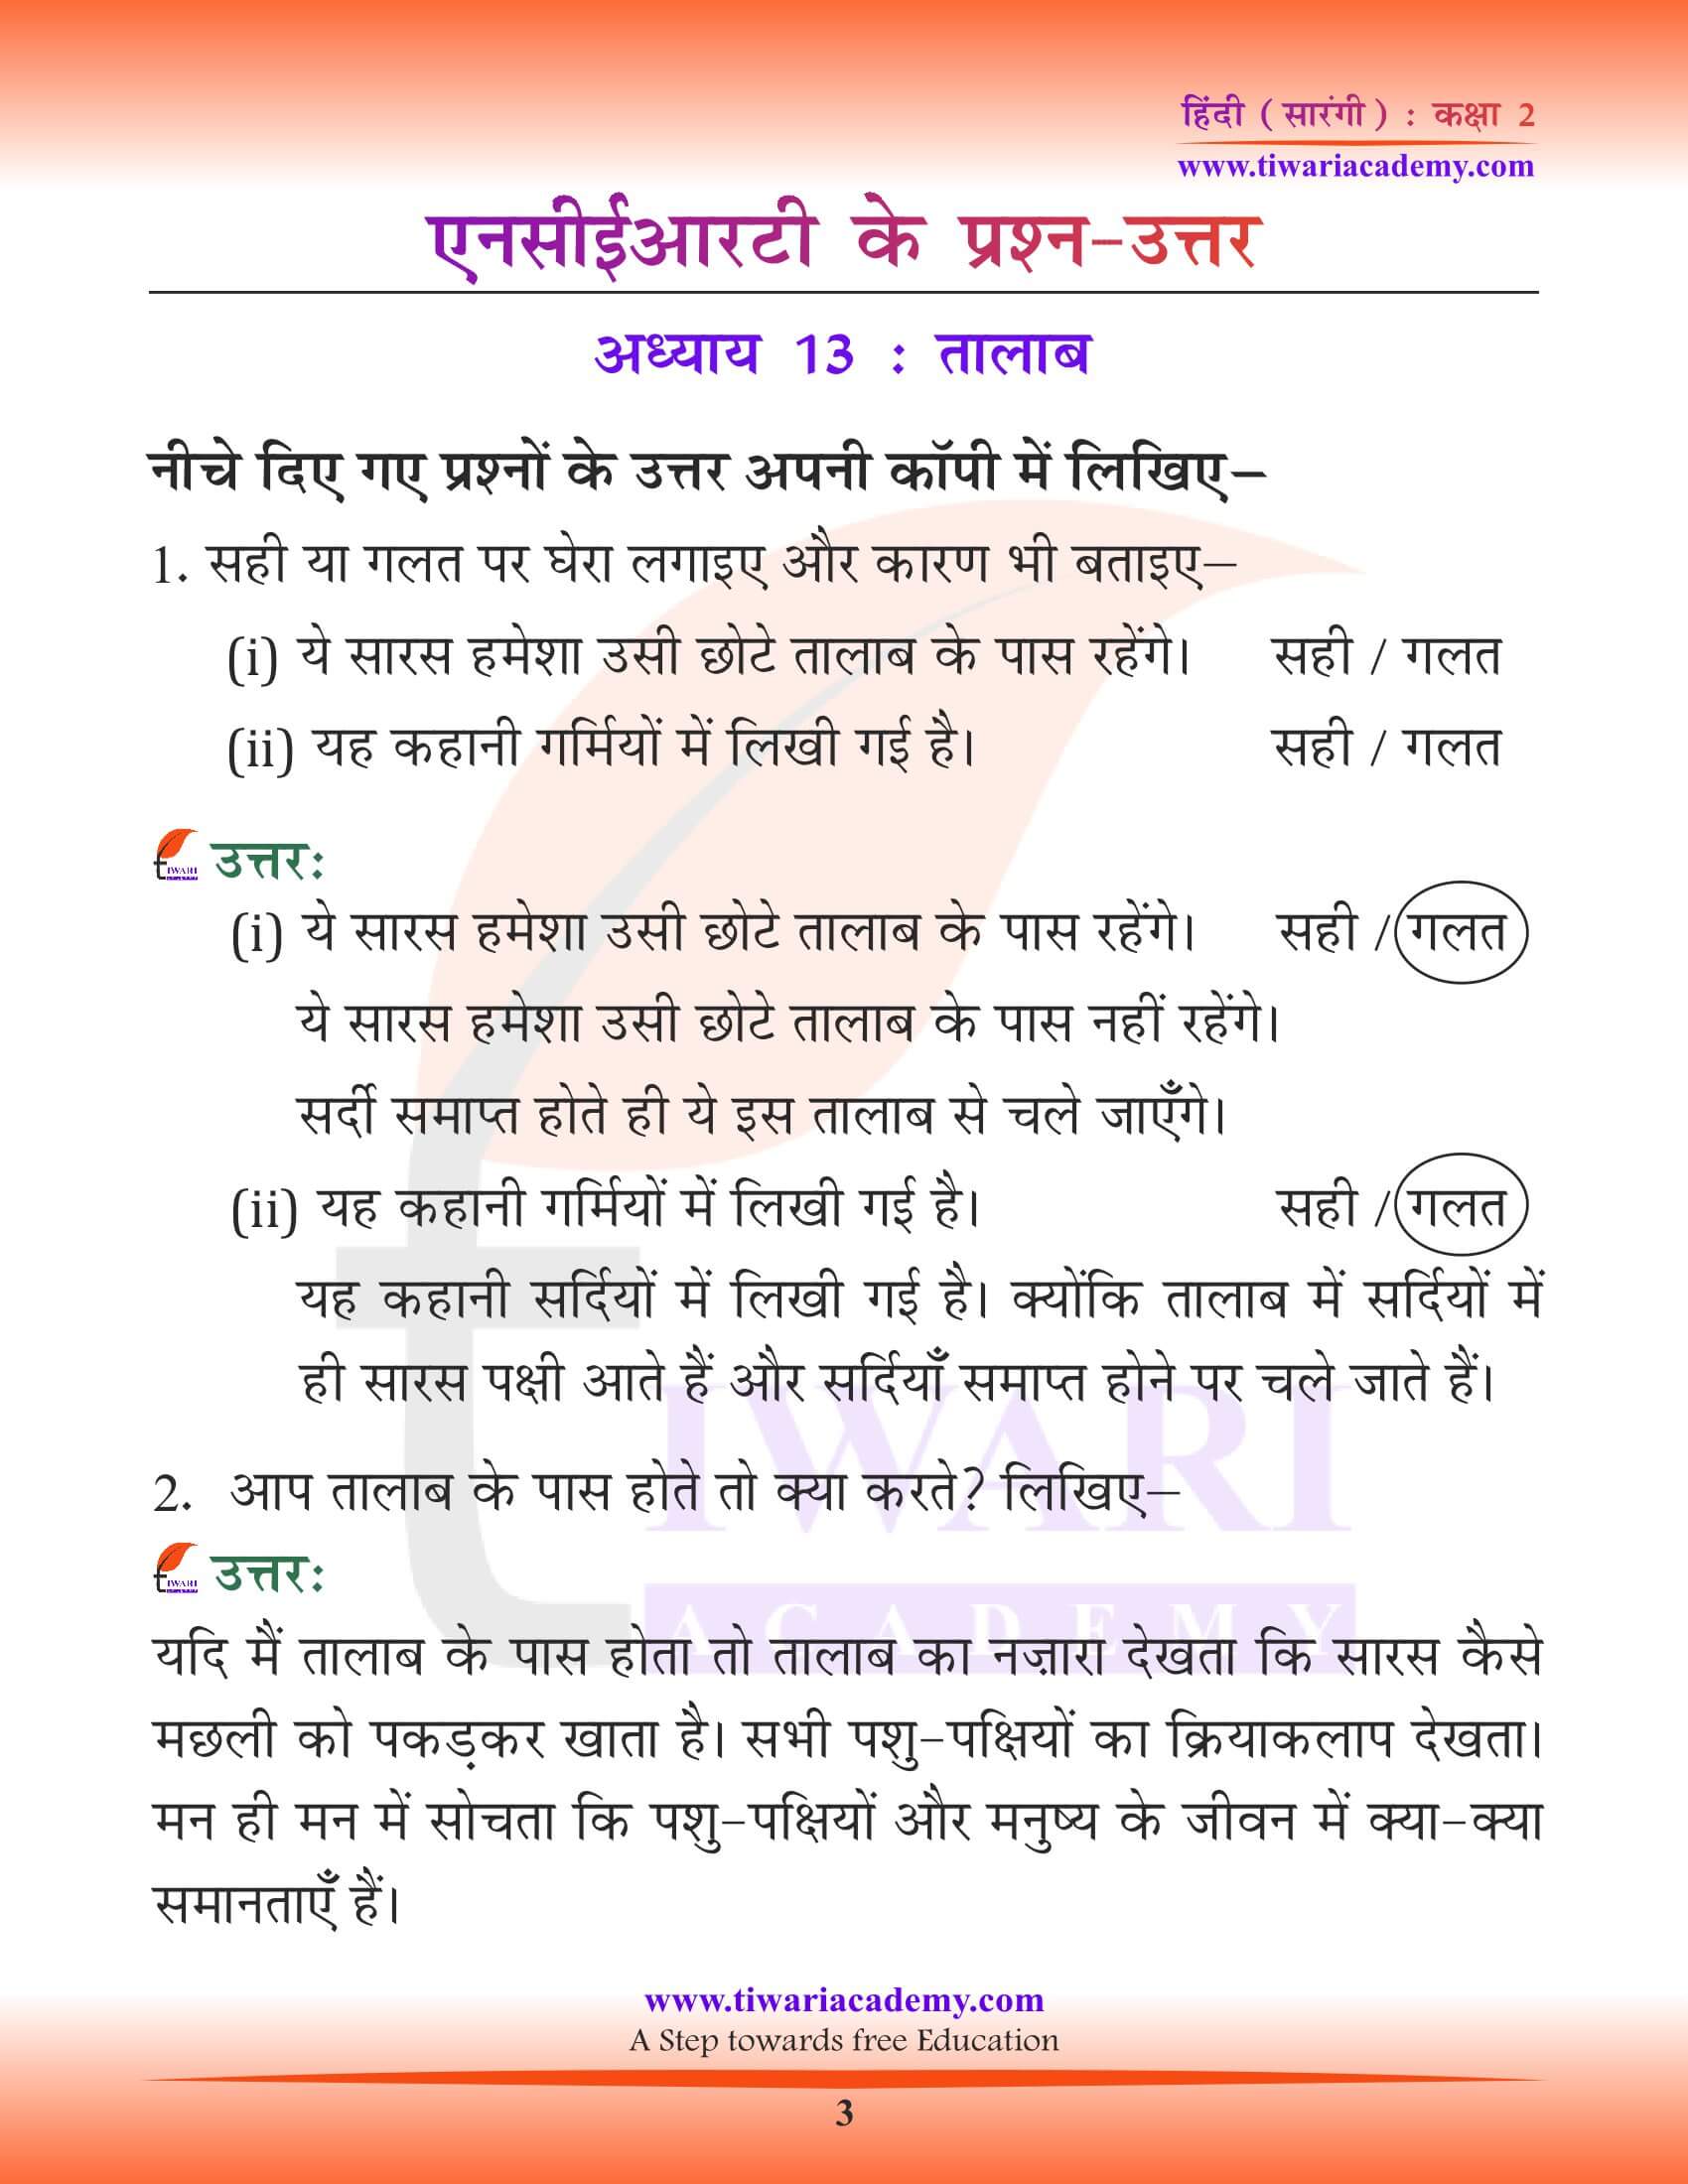 कक्षा 2 हिंदी सारंगी अध्याय 13 तालाब